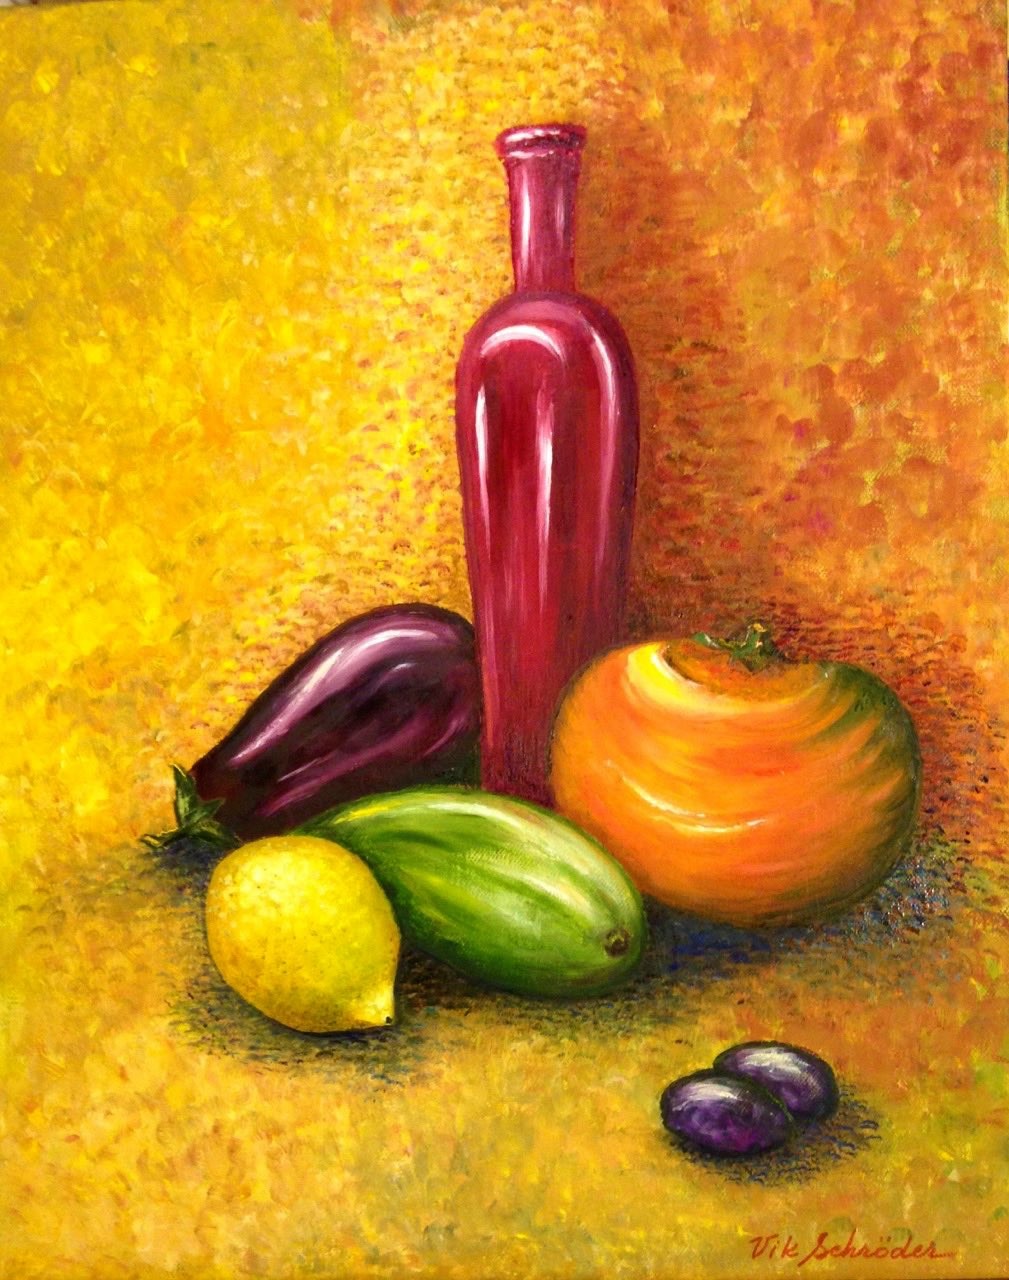 Canvas 40x50, Oil